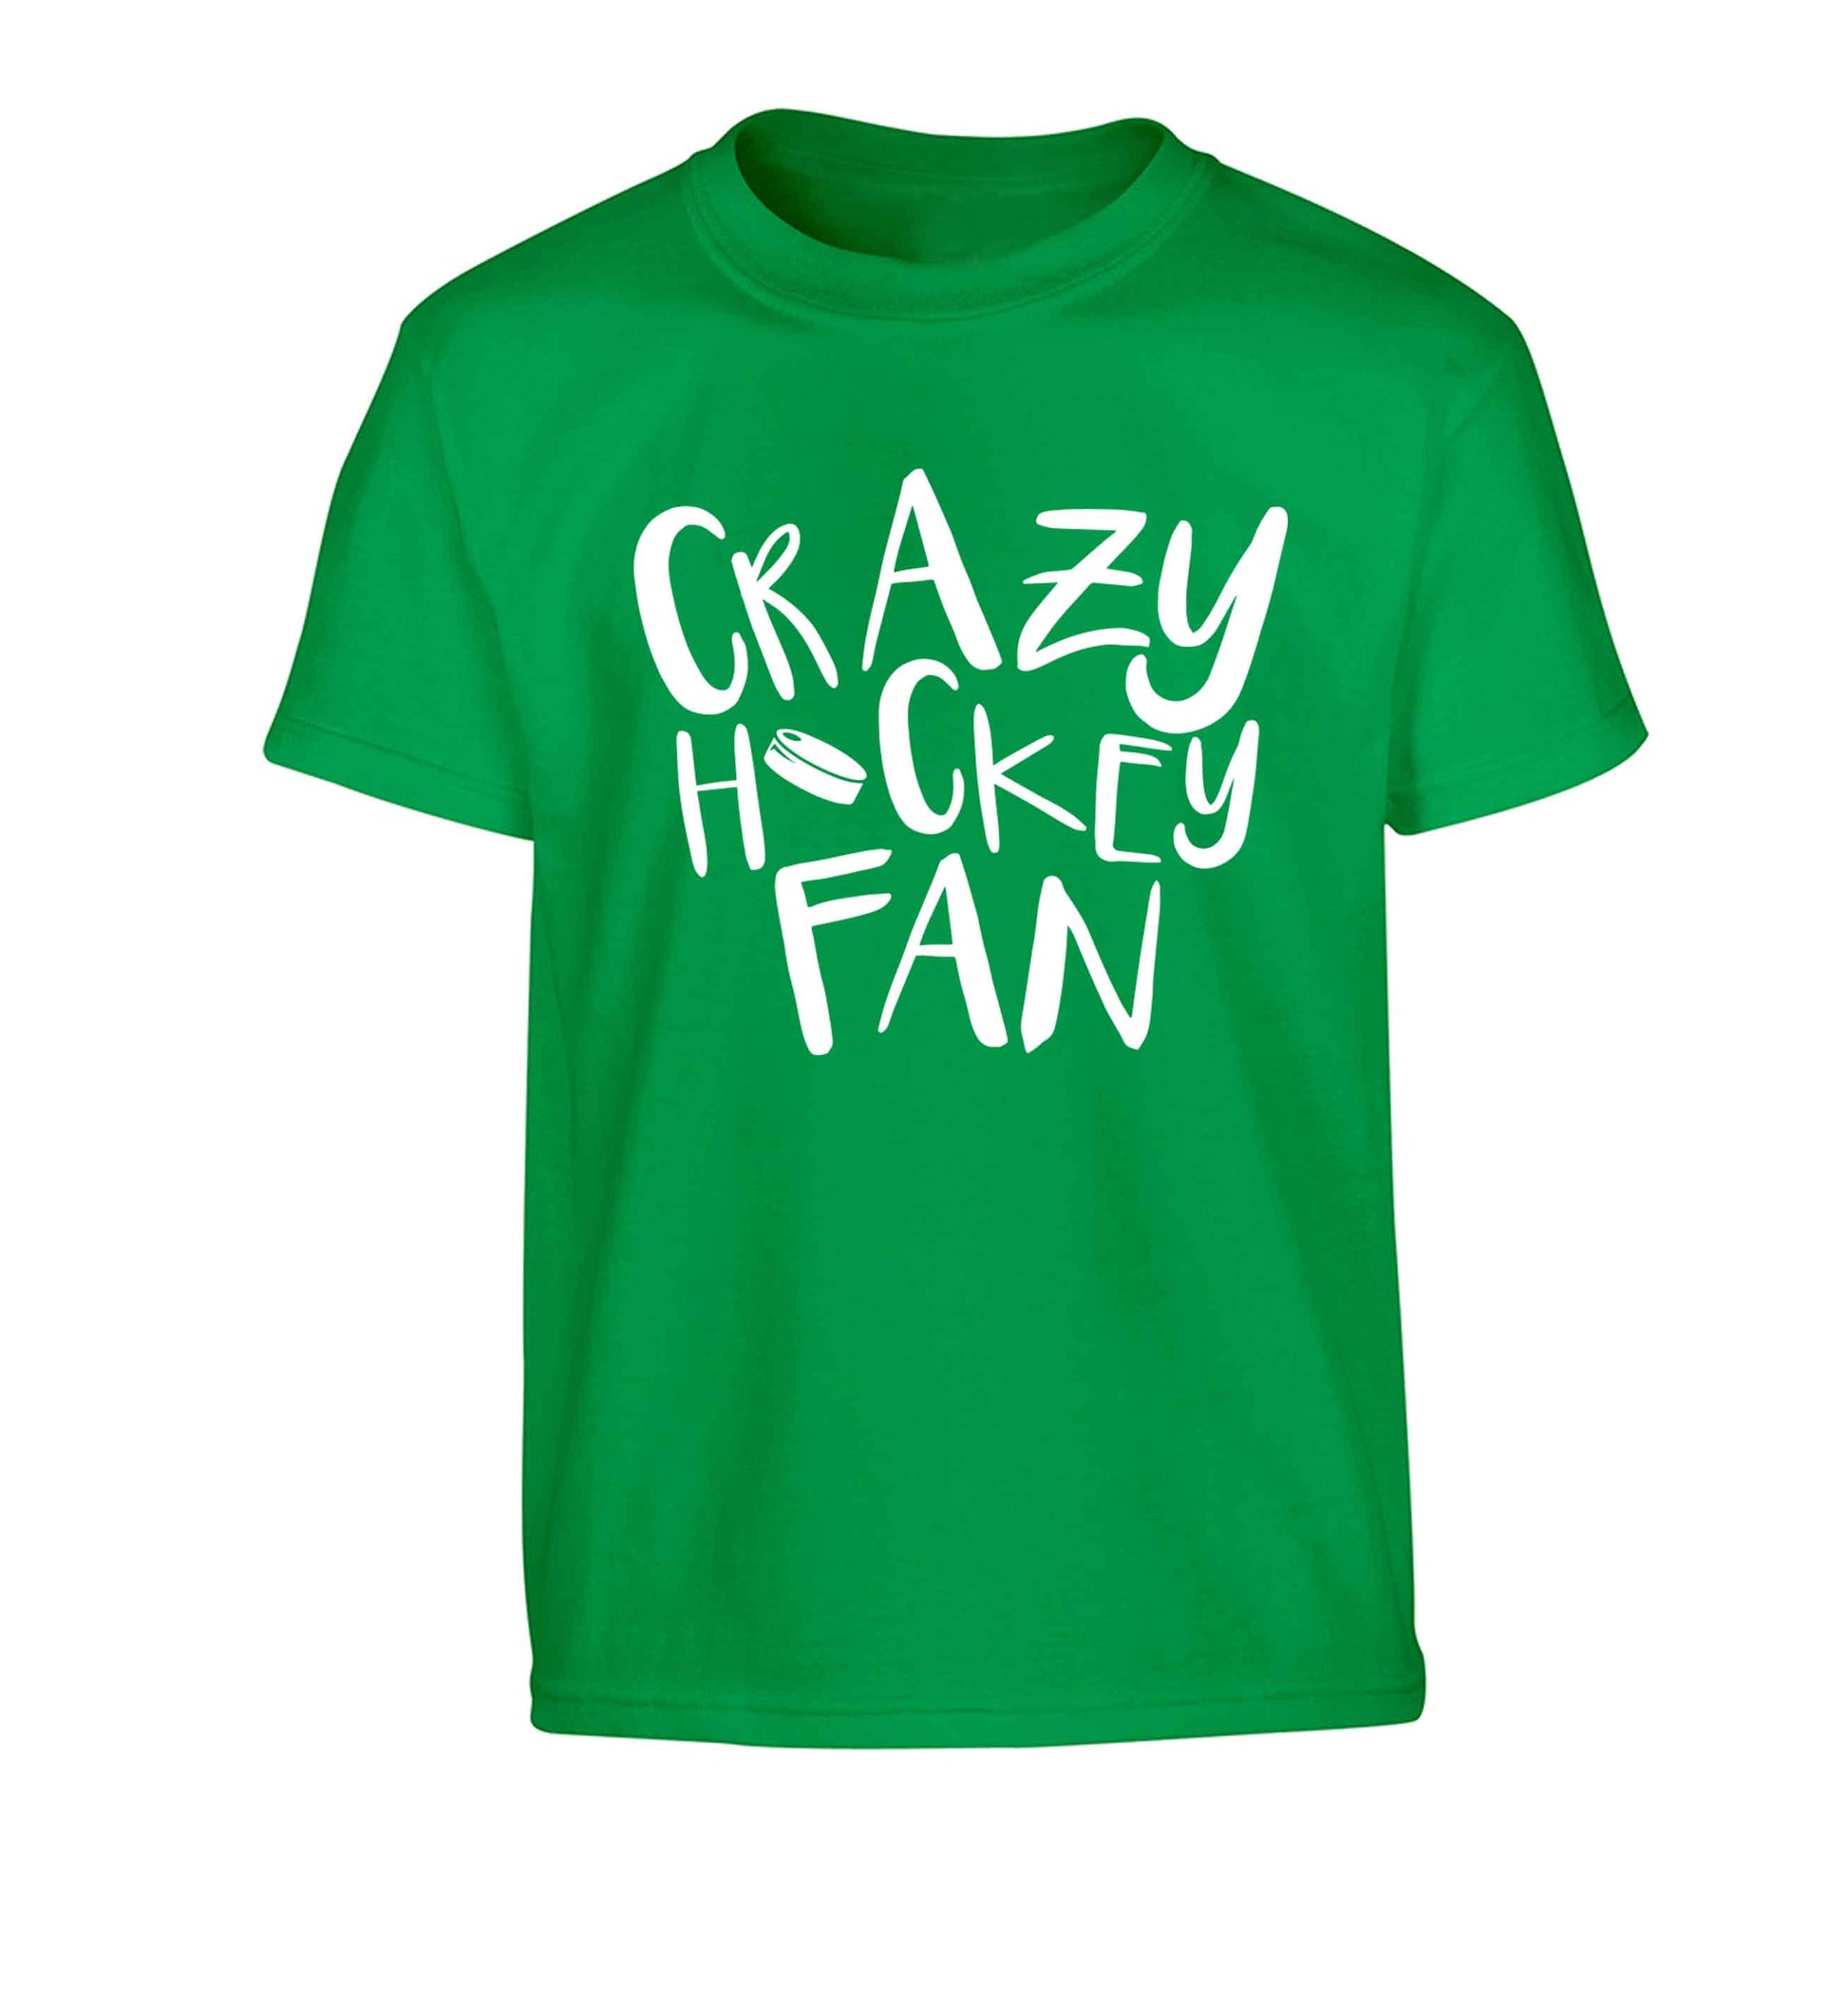 Crazy hockey fan Children's green Tshirt 12-13 Years